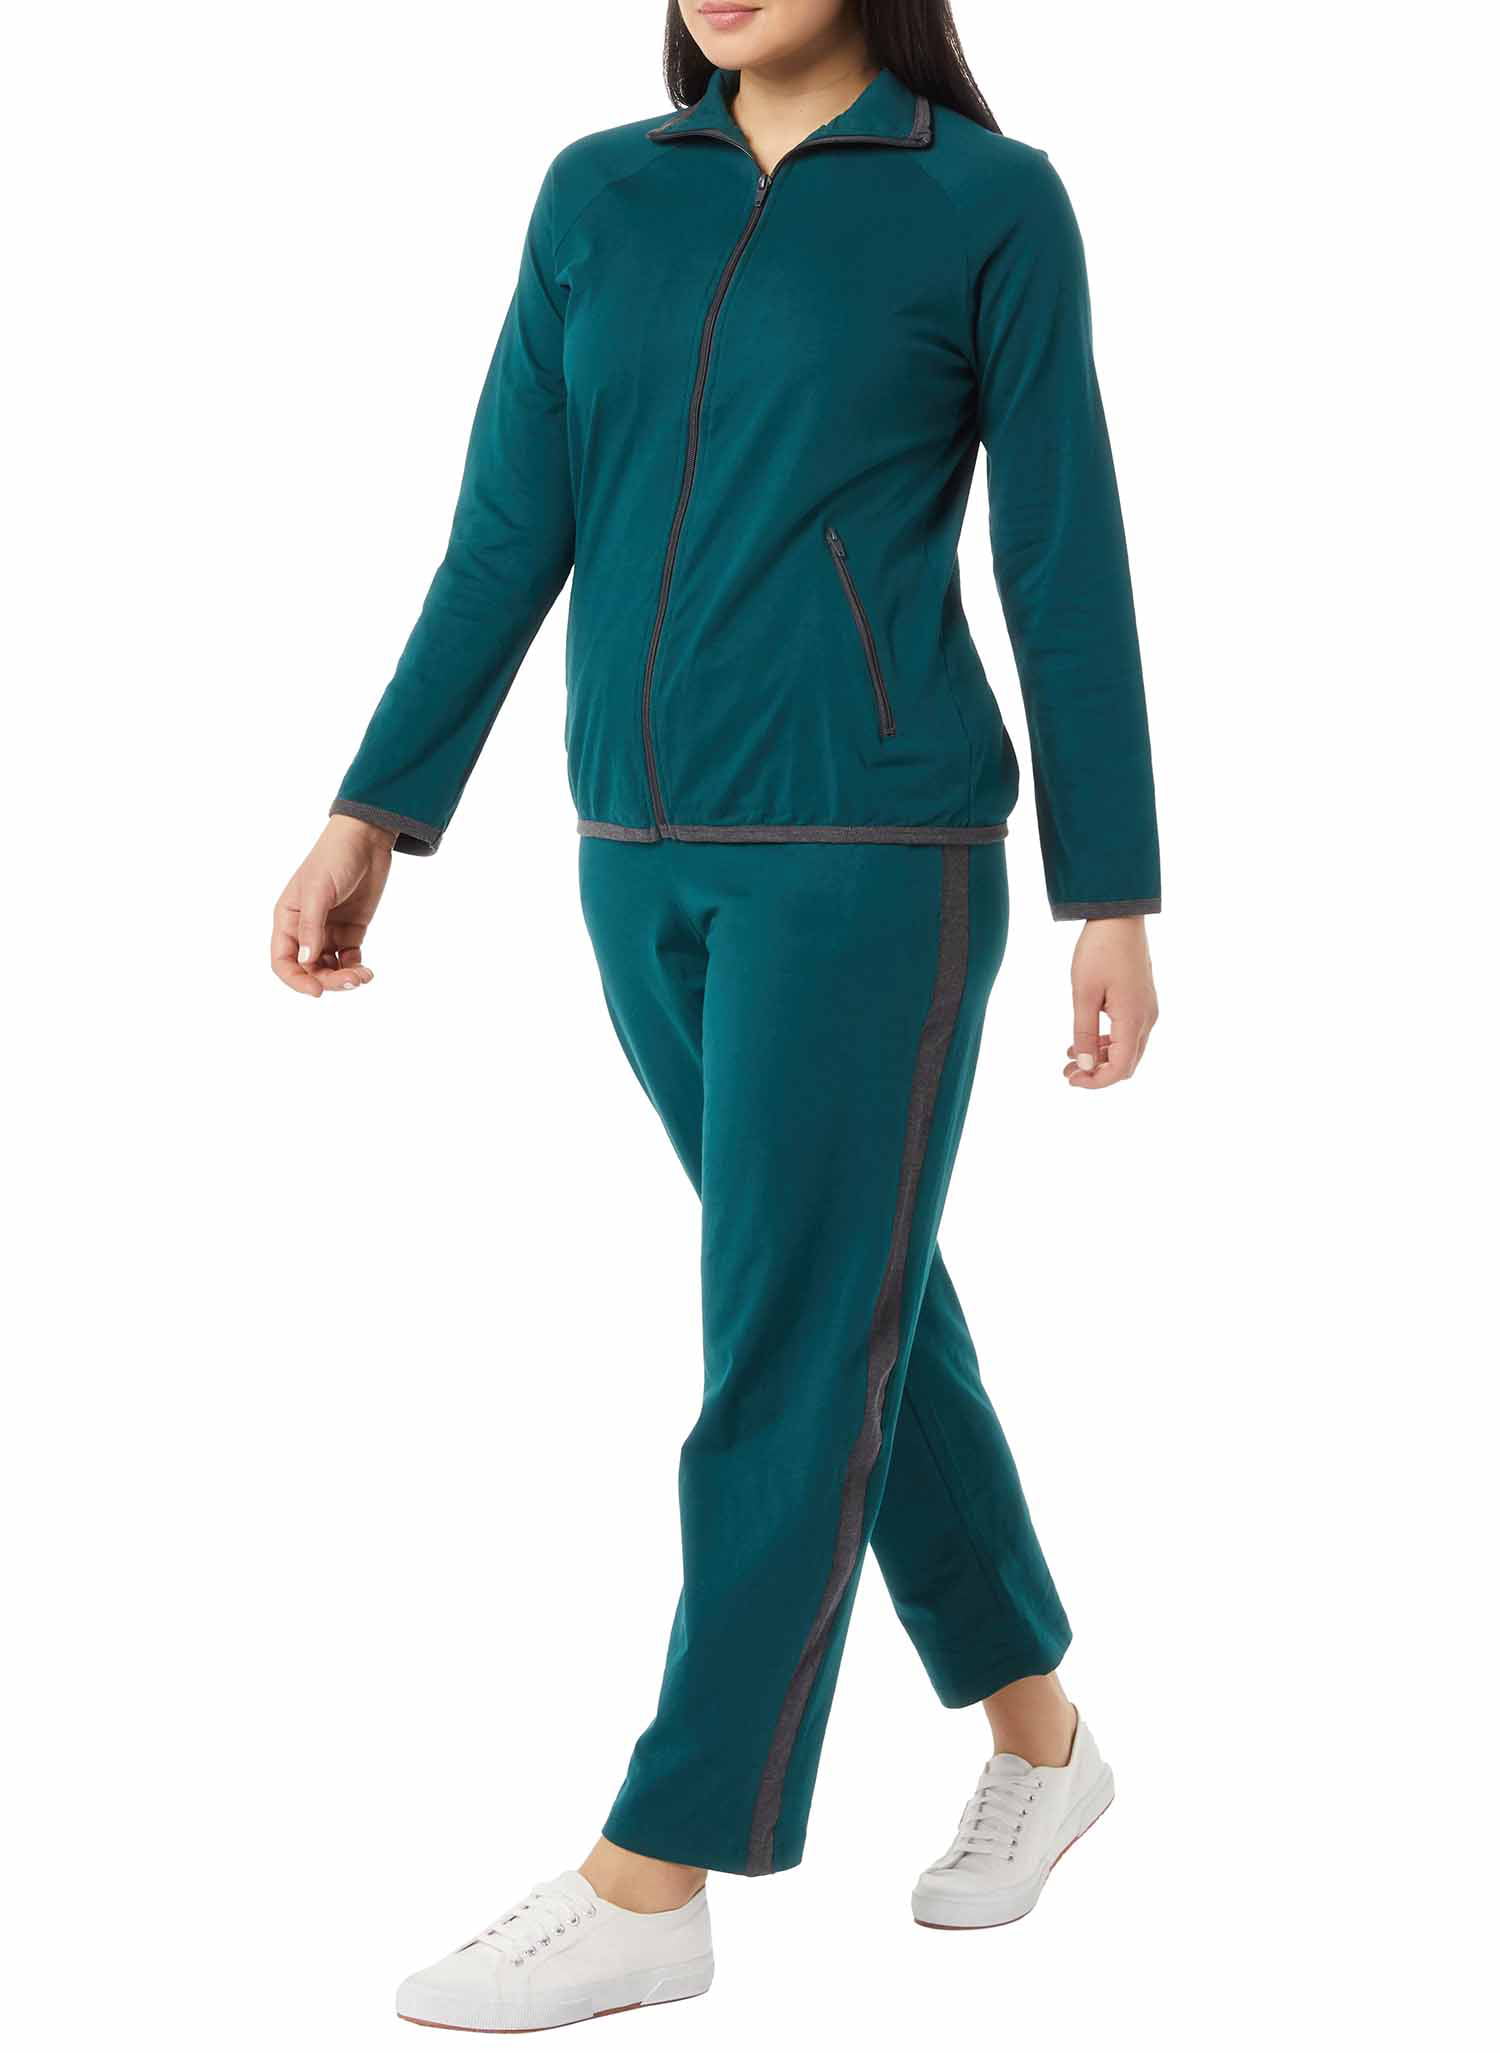 Irevial Women Pjs Pajama Velvet Tracksuit Set Full Zipper 4 Pocket Jogging Suit Sportwear Loungewear 2 Piece Sweatsuit Top & Bottom